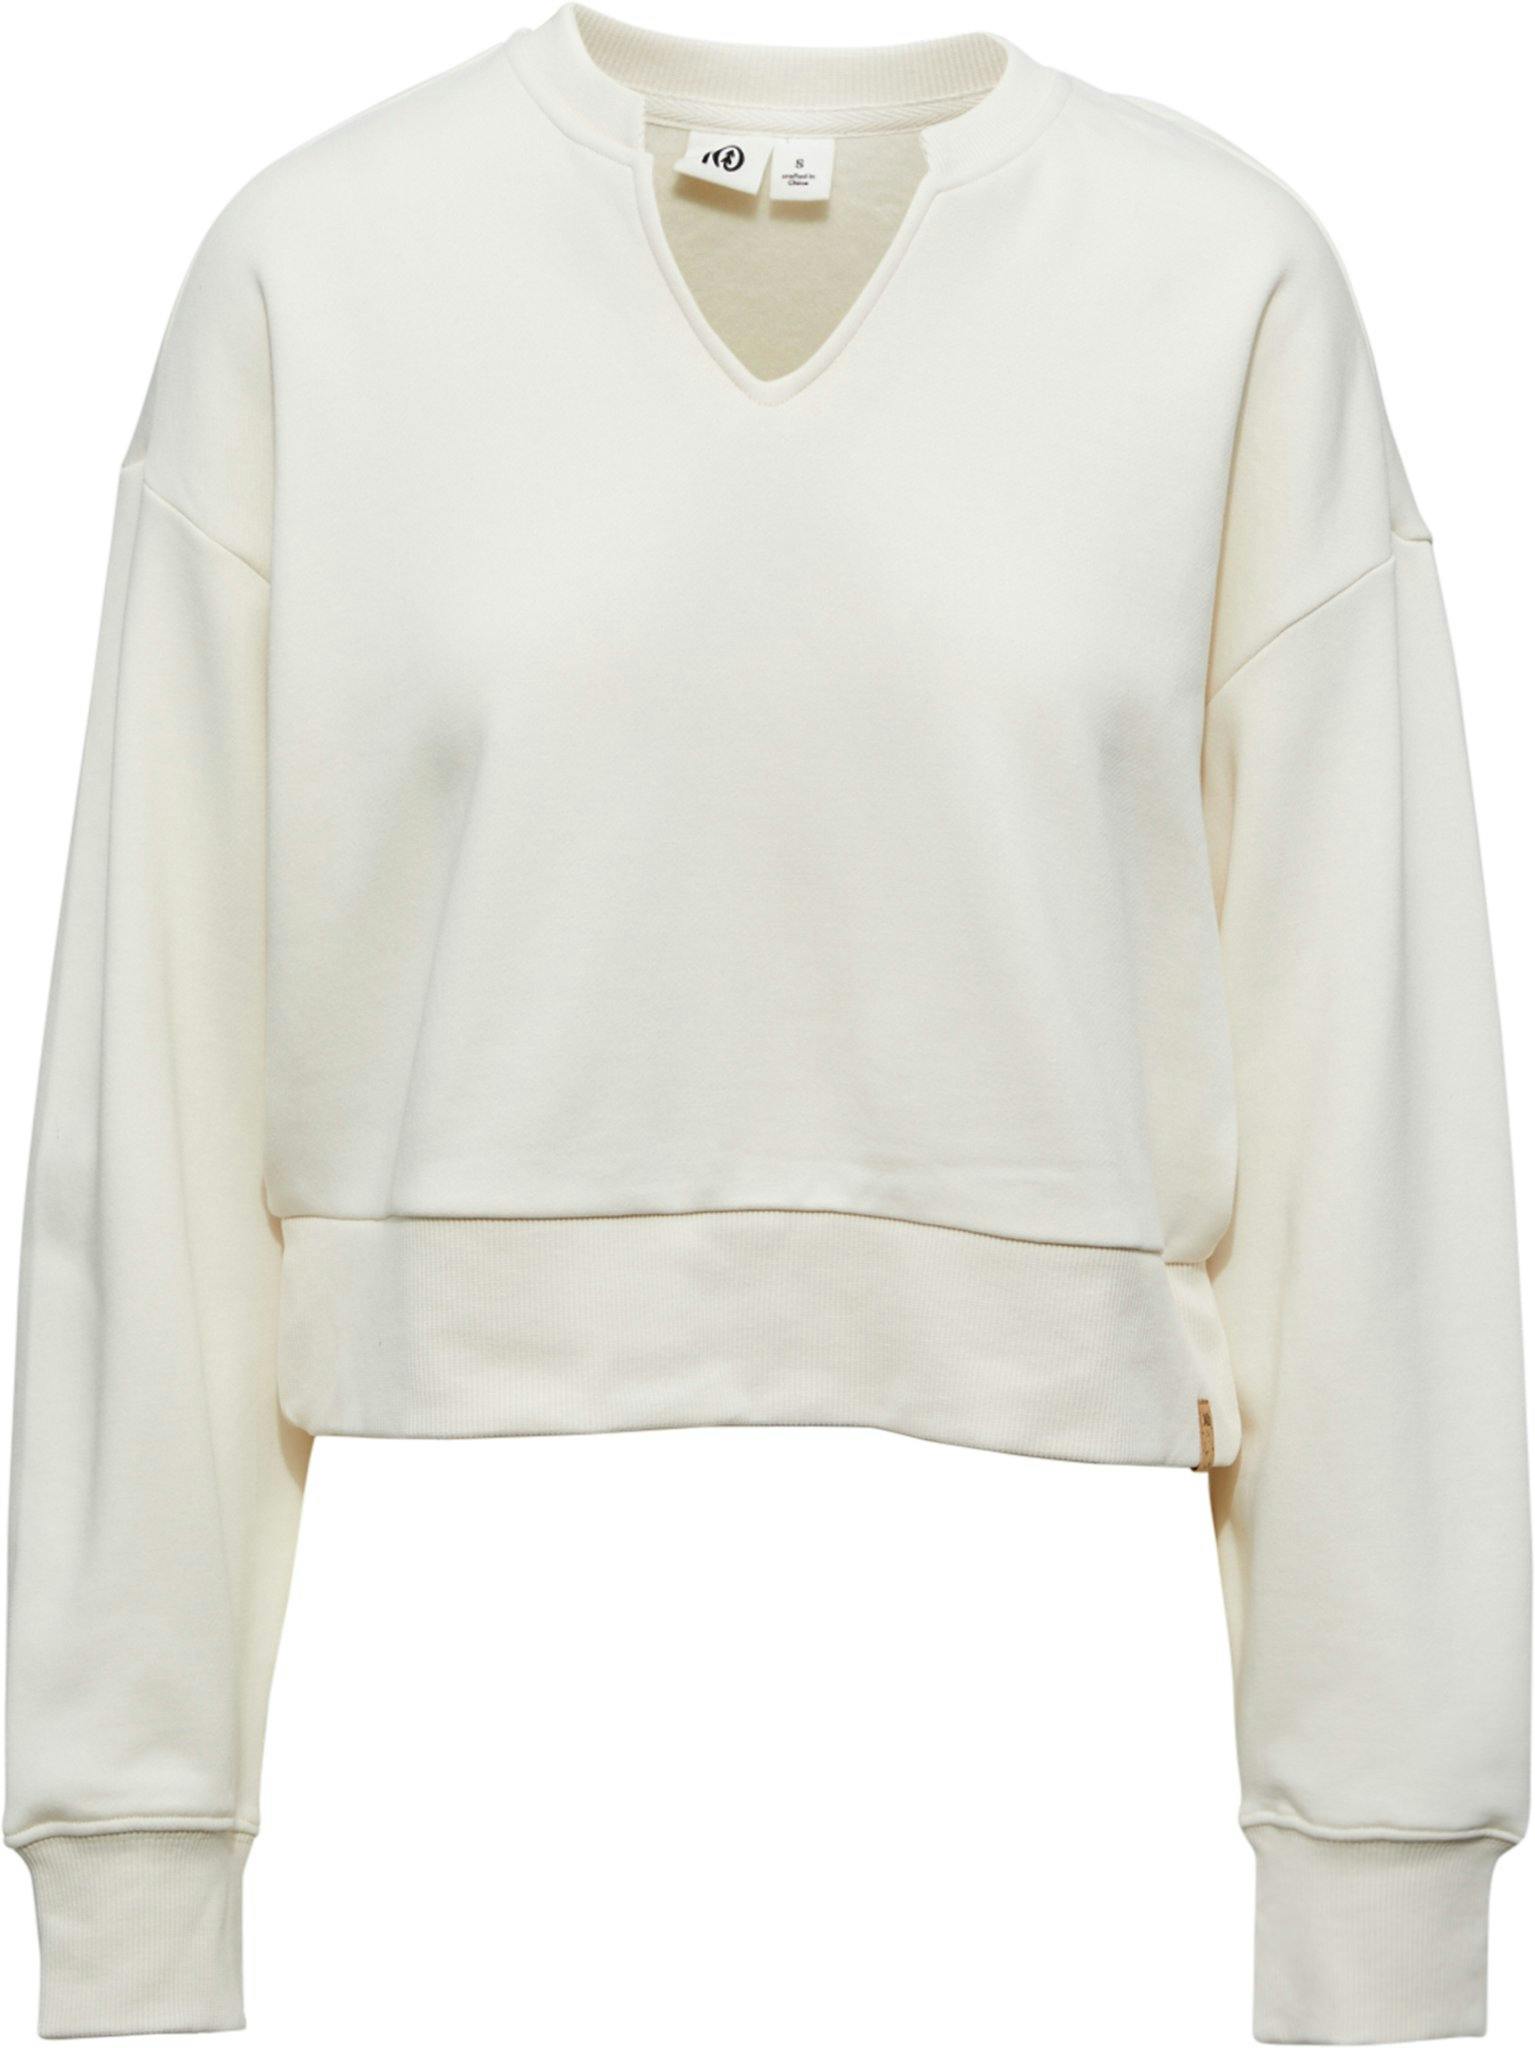 Product image for TreeFleece Notch Neck Cropped Sweatshirt - Women's